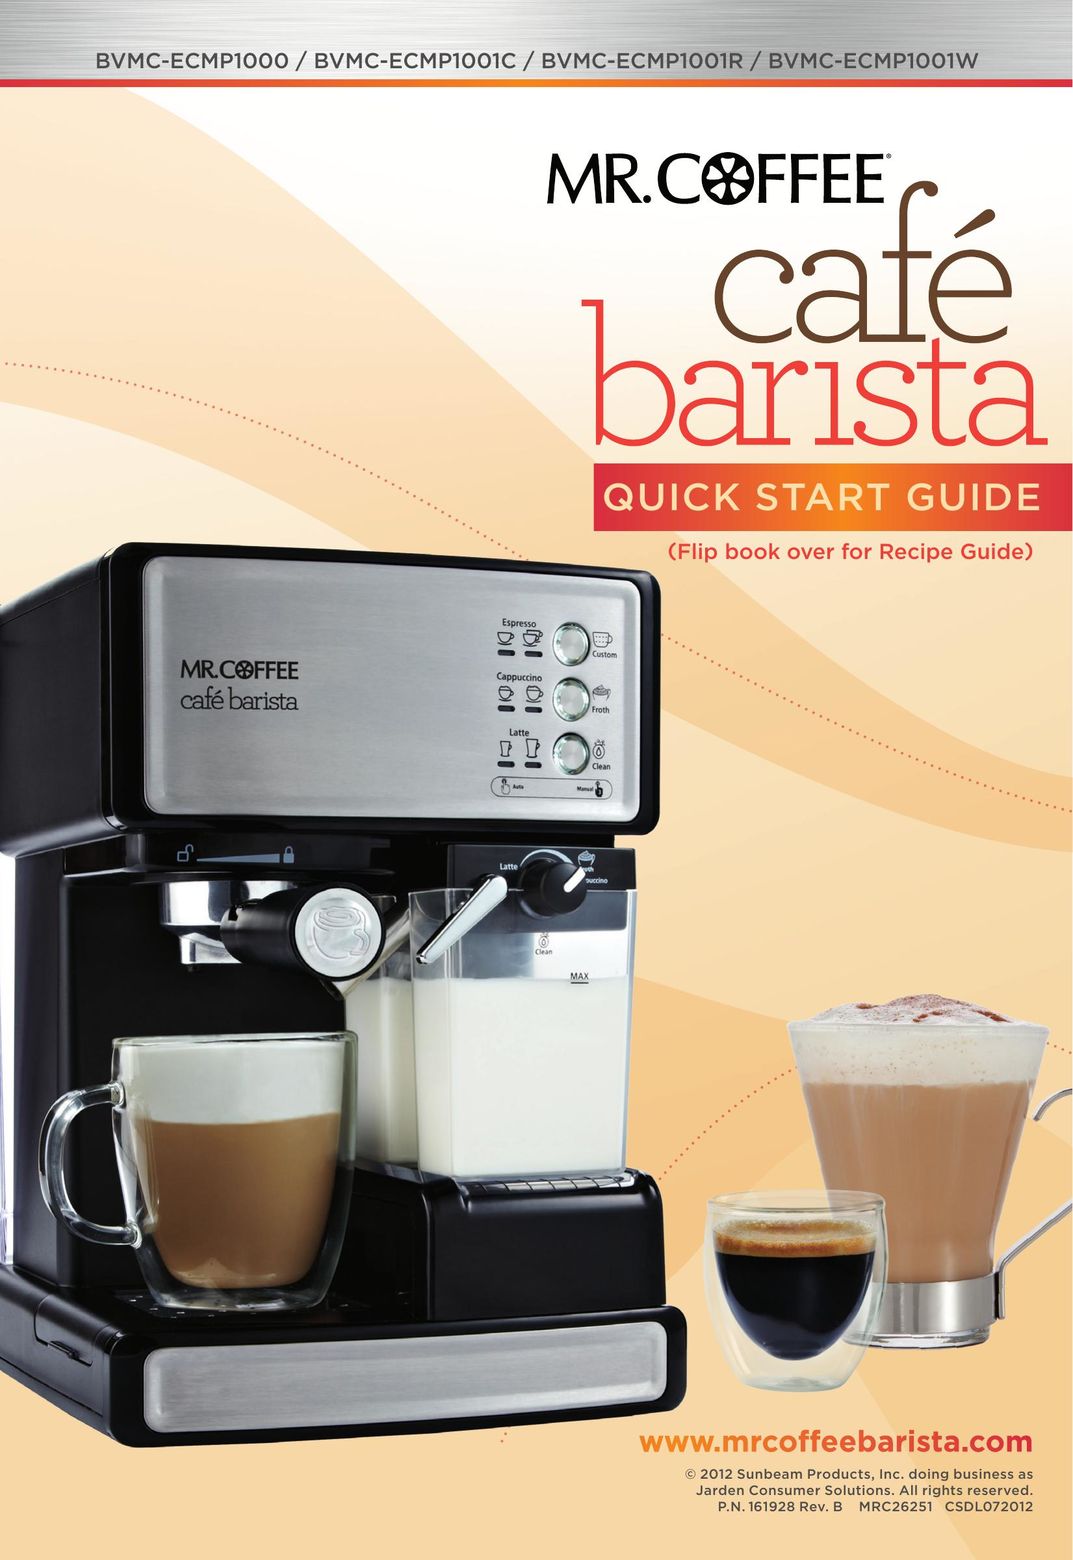 Mr. Coffee BVMC-ECMP1001W Coffeemaker User Manual